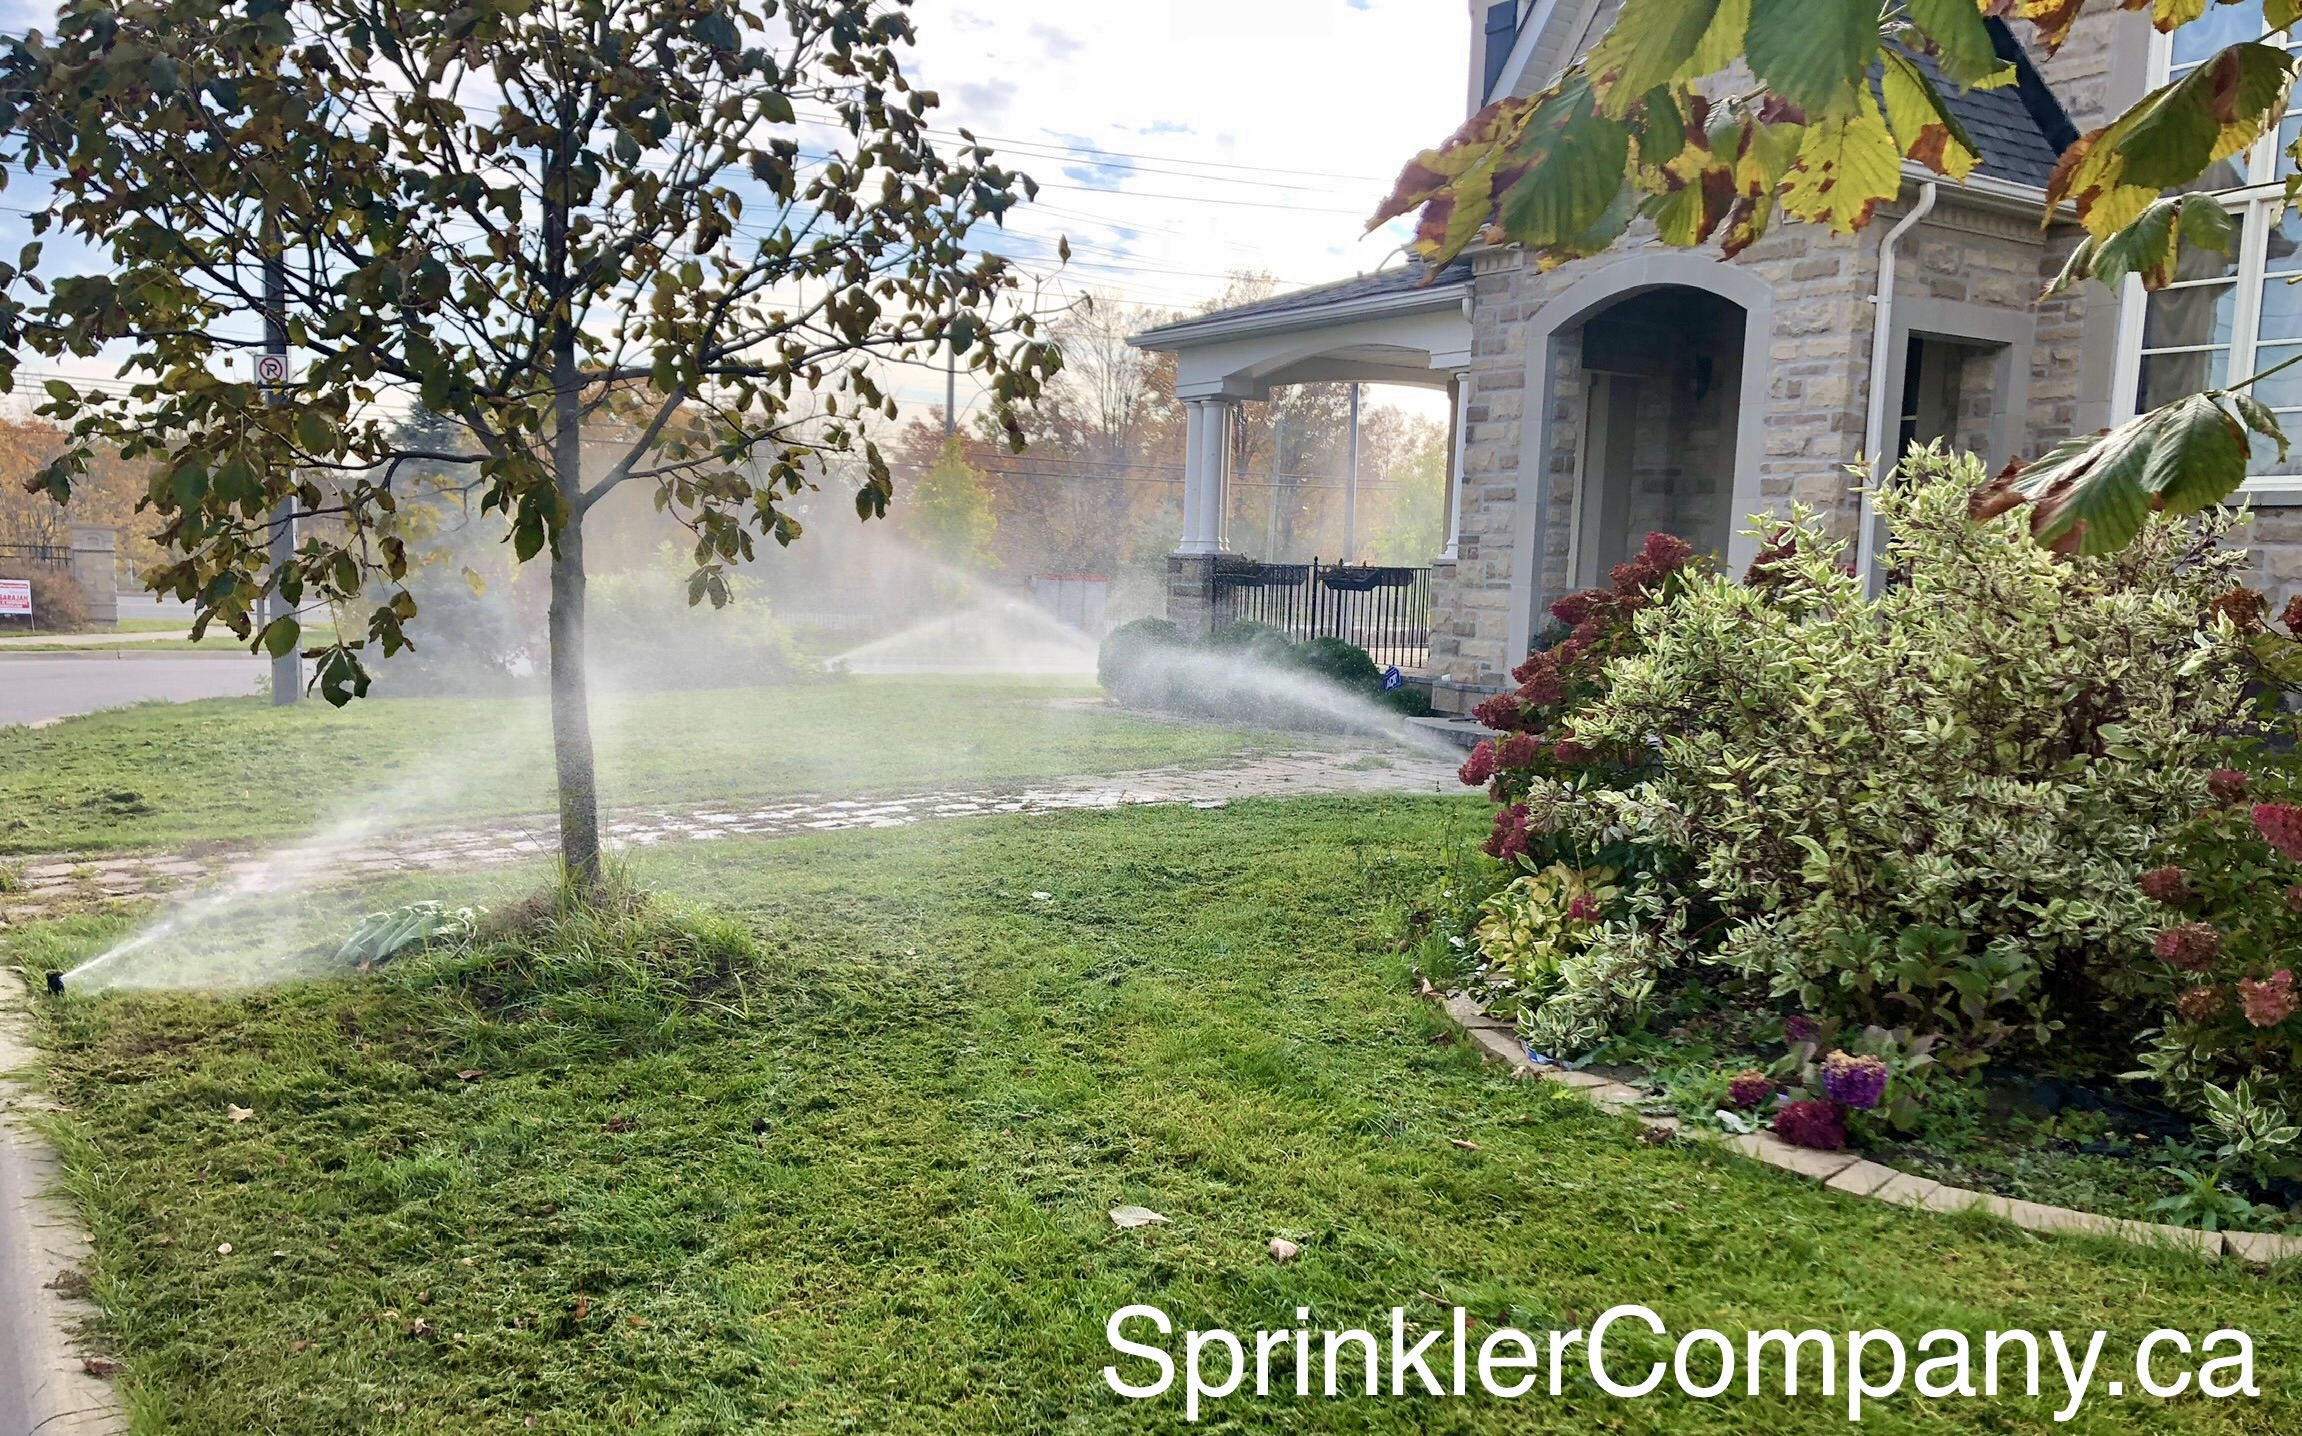 brass sprinkler head replacement - The Sprinkler Company Inc.